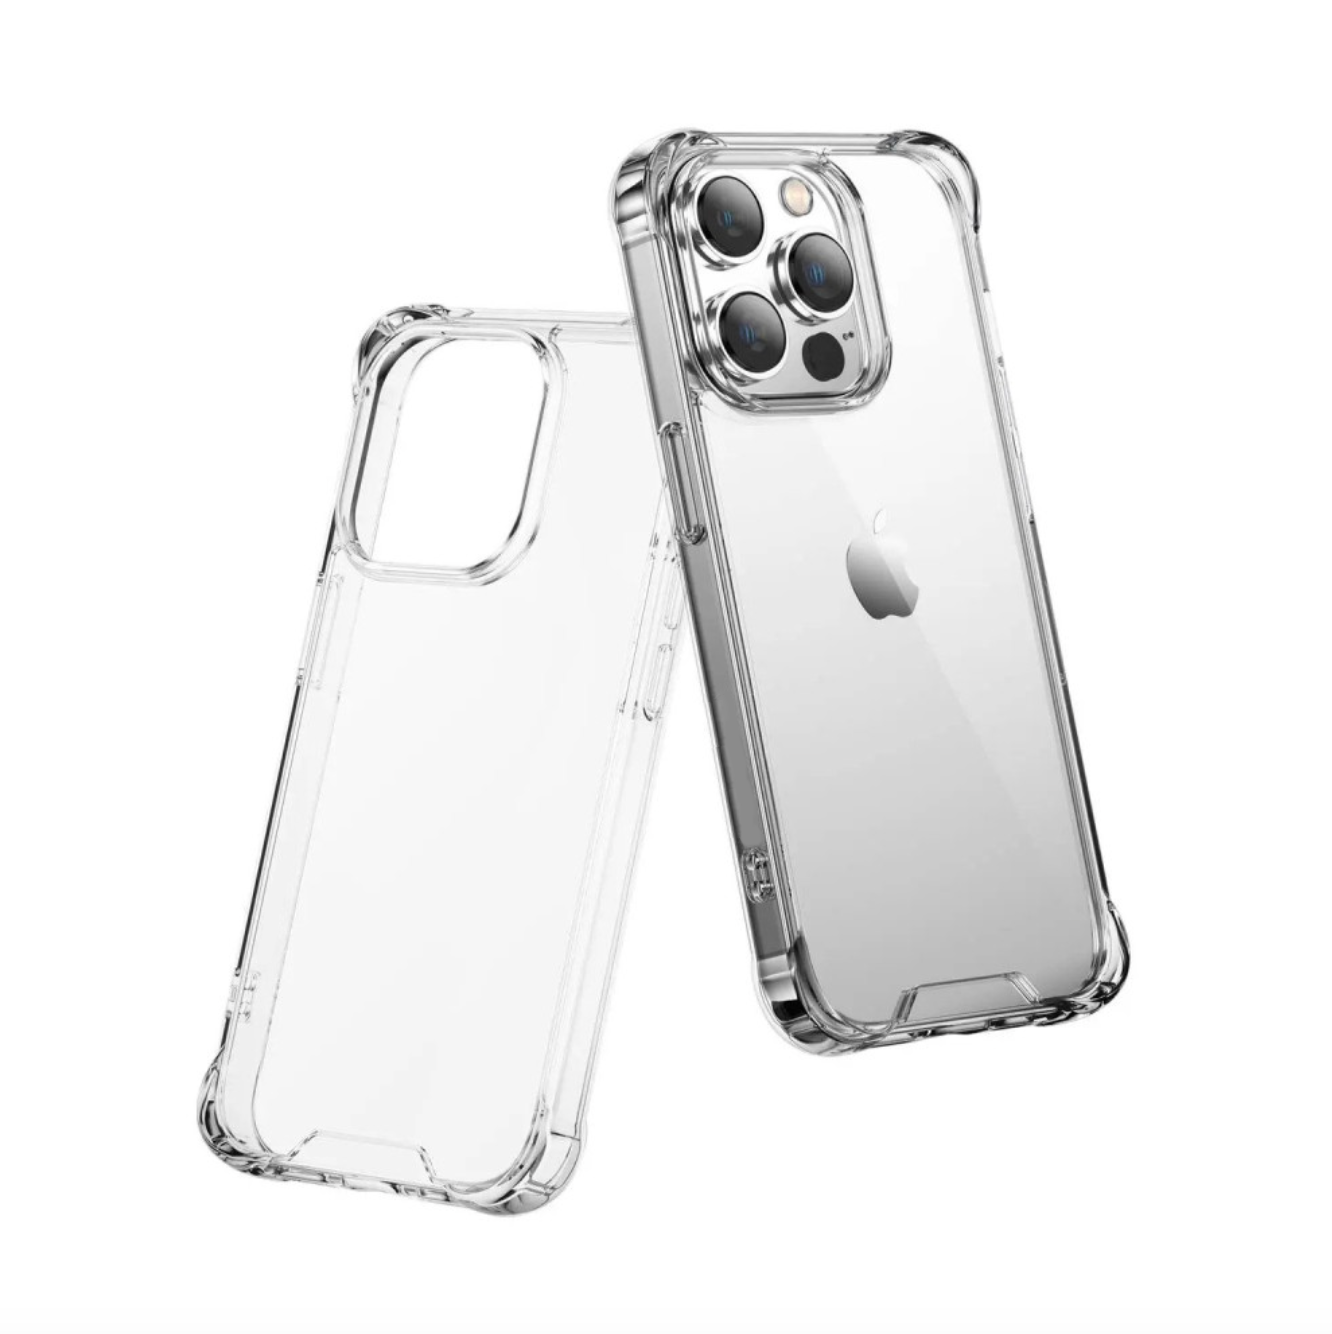 Carcasa transparente borde color iPhone 15 Pro